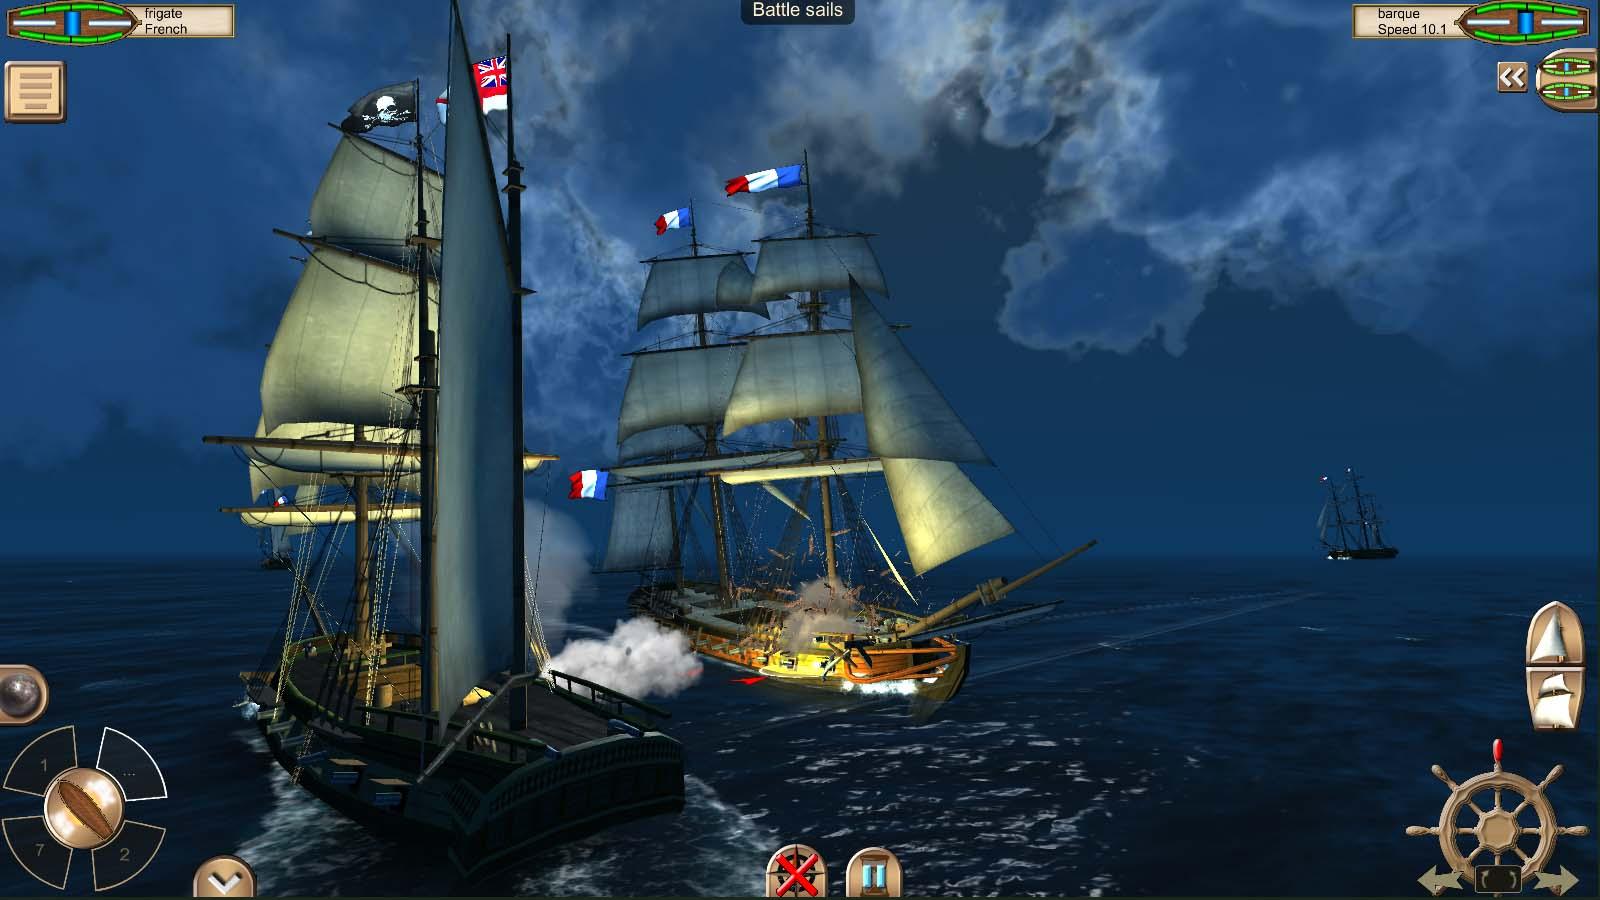 The Pirate Caribbean Hunt v5.6 Apk Mod Unlimited Money